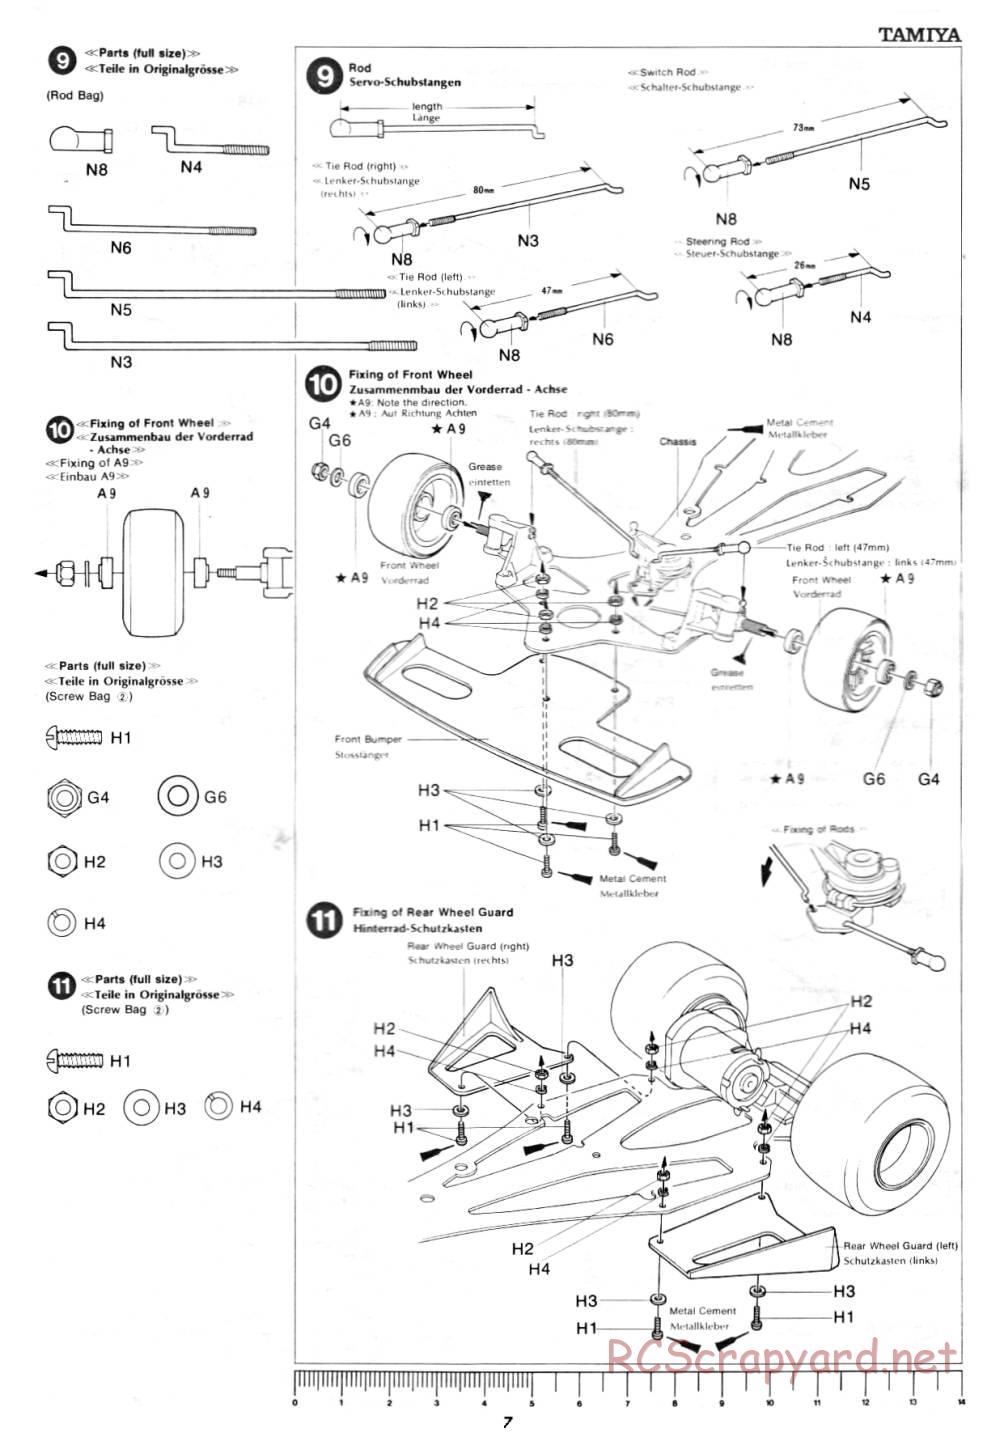 Tamiya - Ferrari 312T3 - 58011 - Manual - Page 7